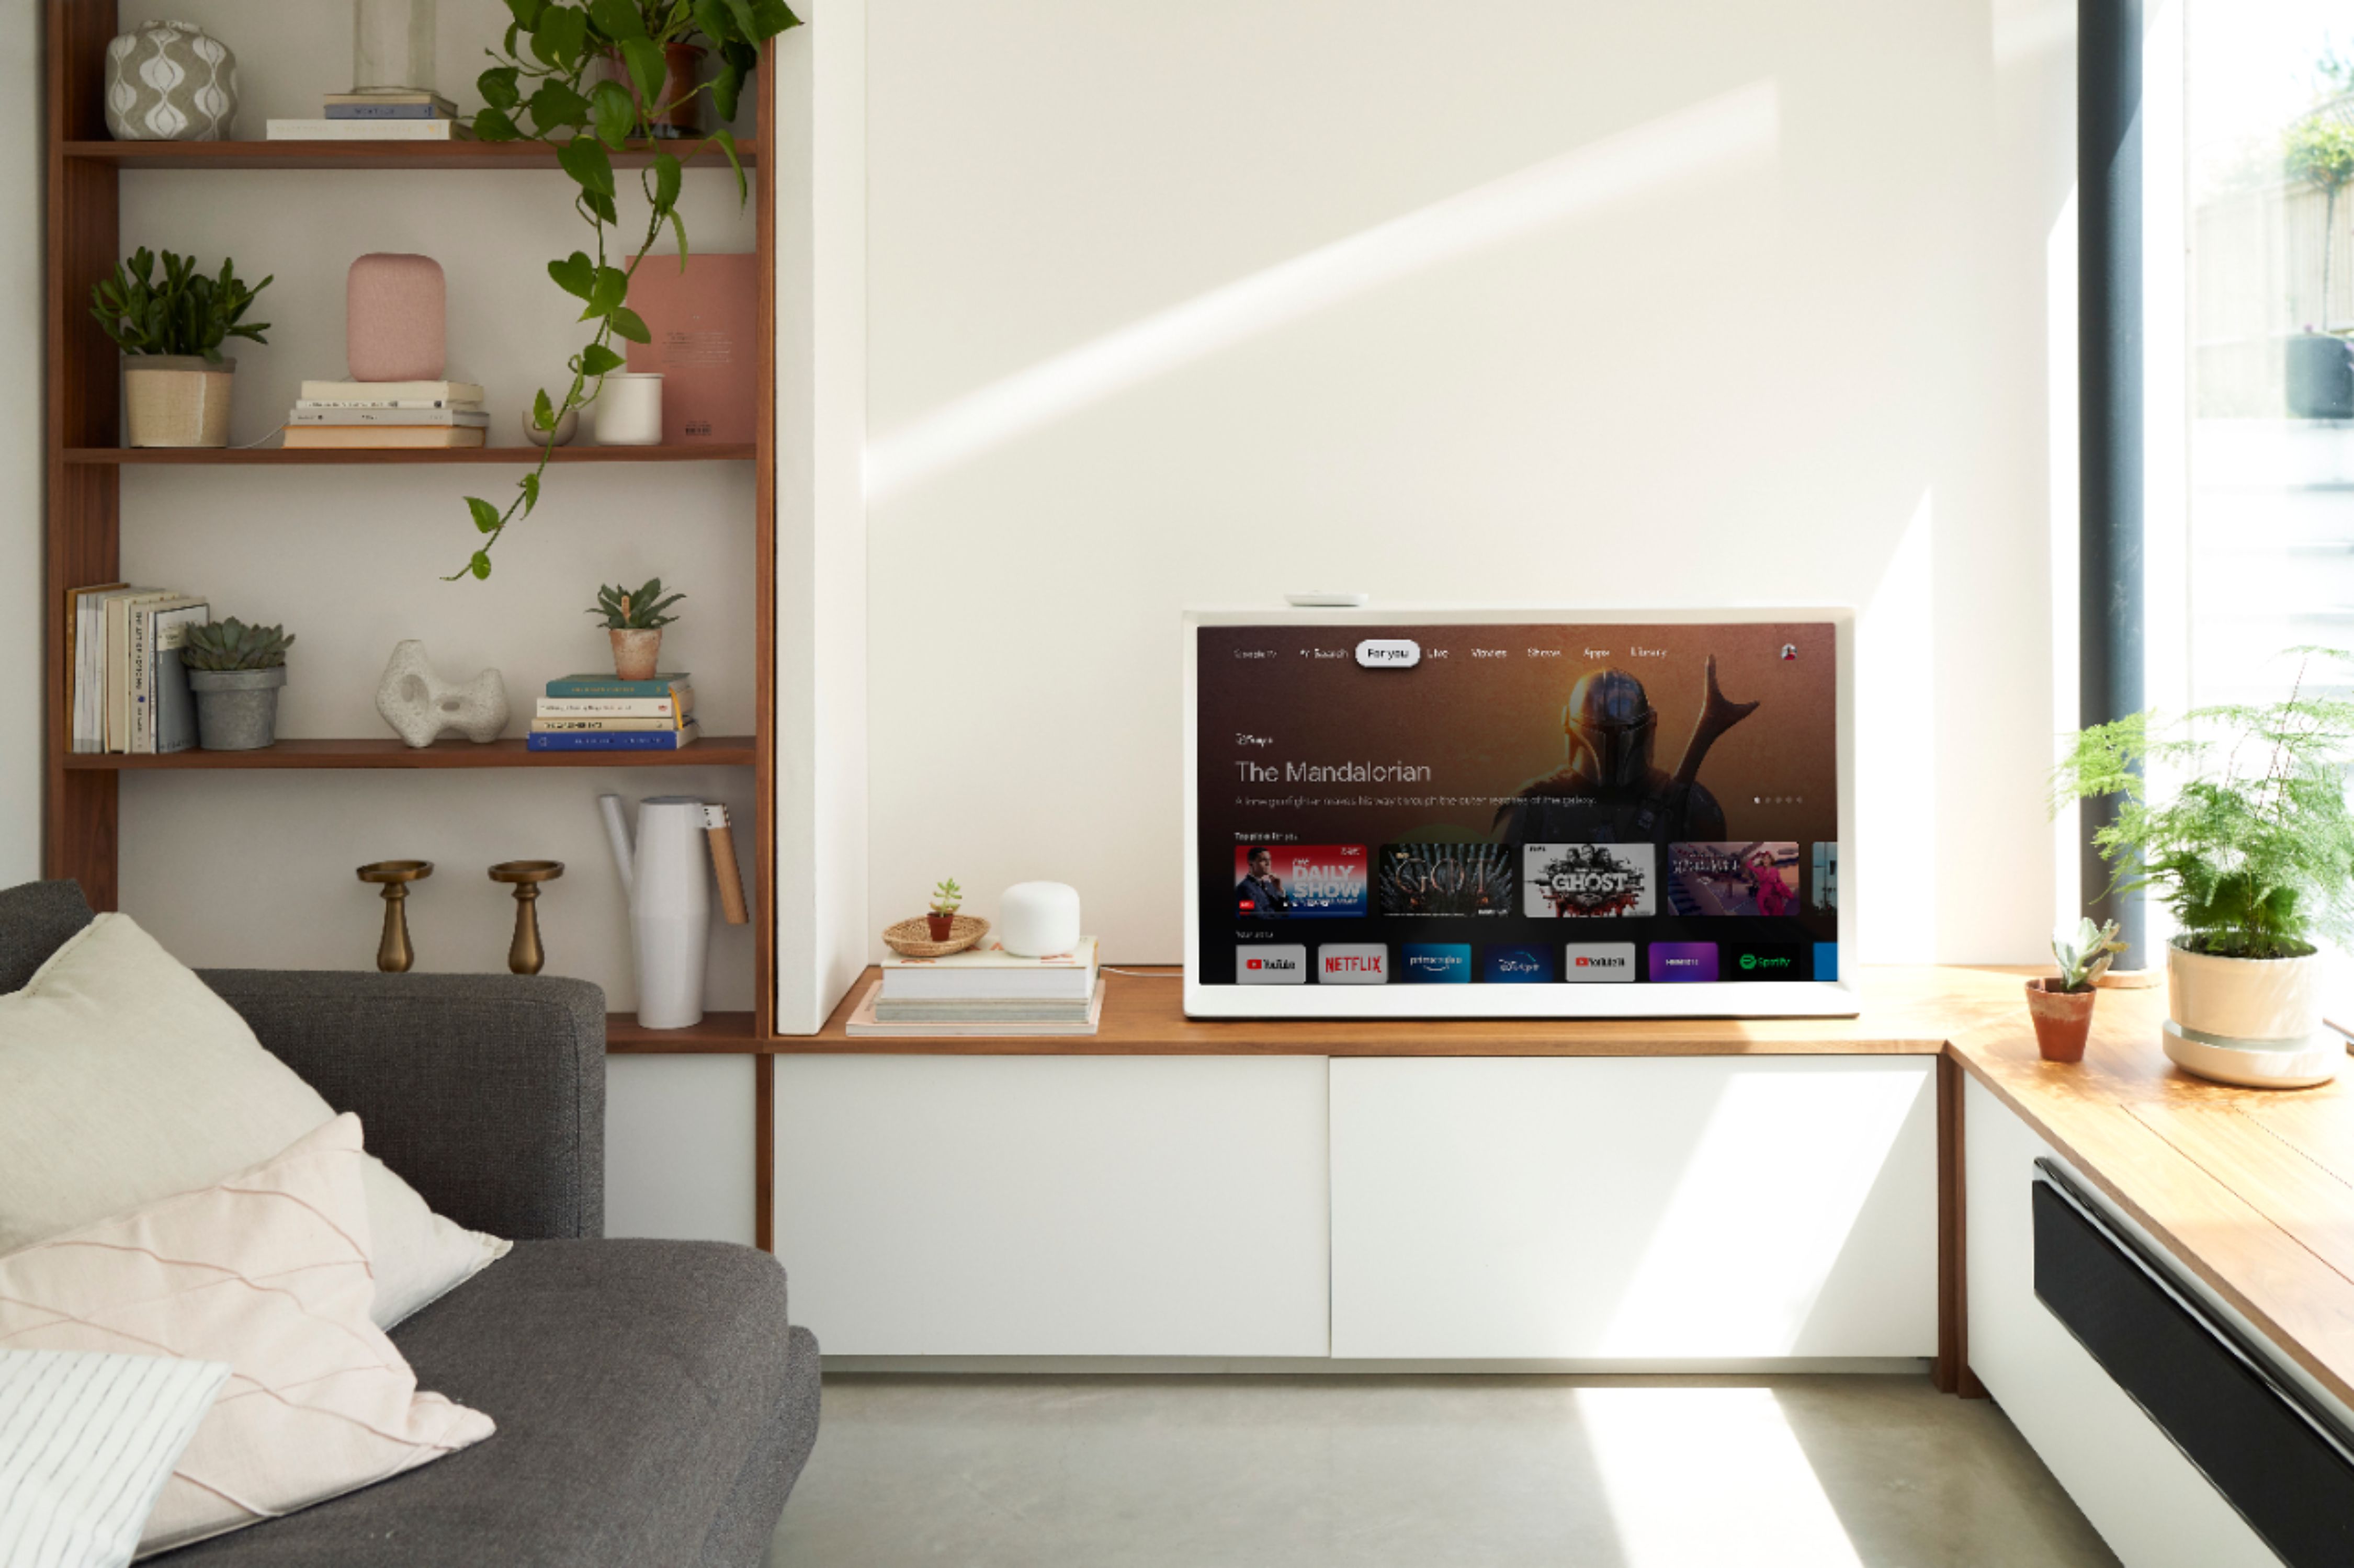 Google Chromecast con Google TV (4K) - Streaming Stick Entertainment con  búsqueda por voz, mira películas, programas y televisión en vivo en 4K HDR  